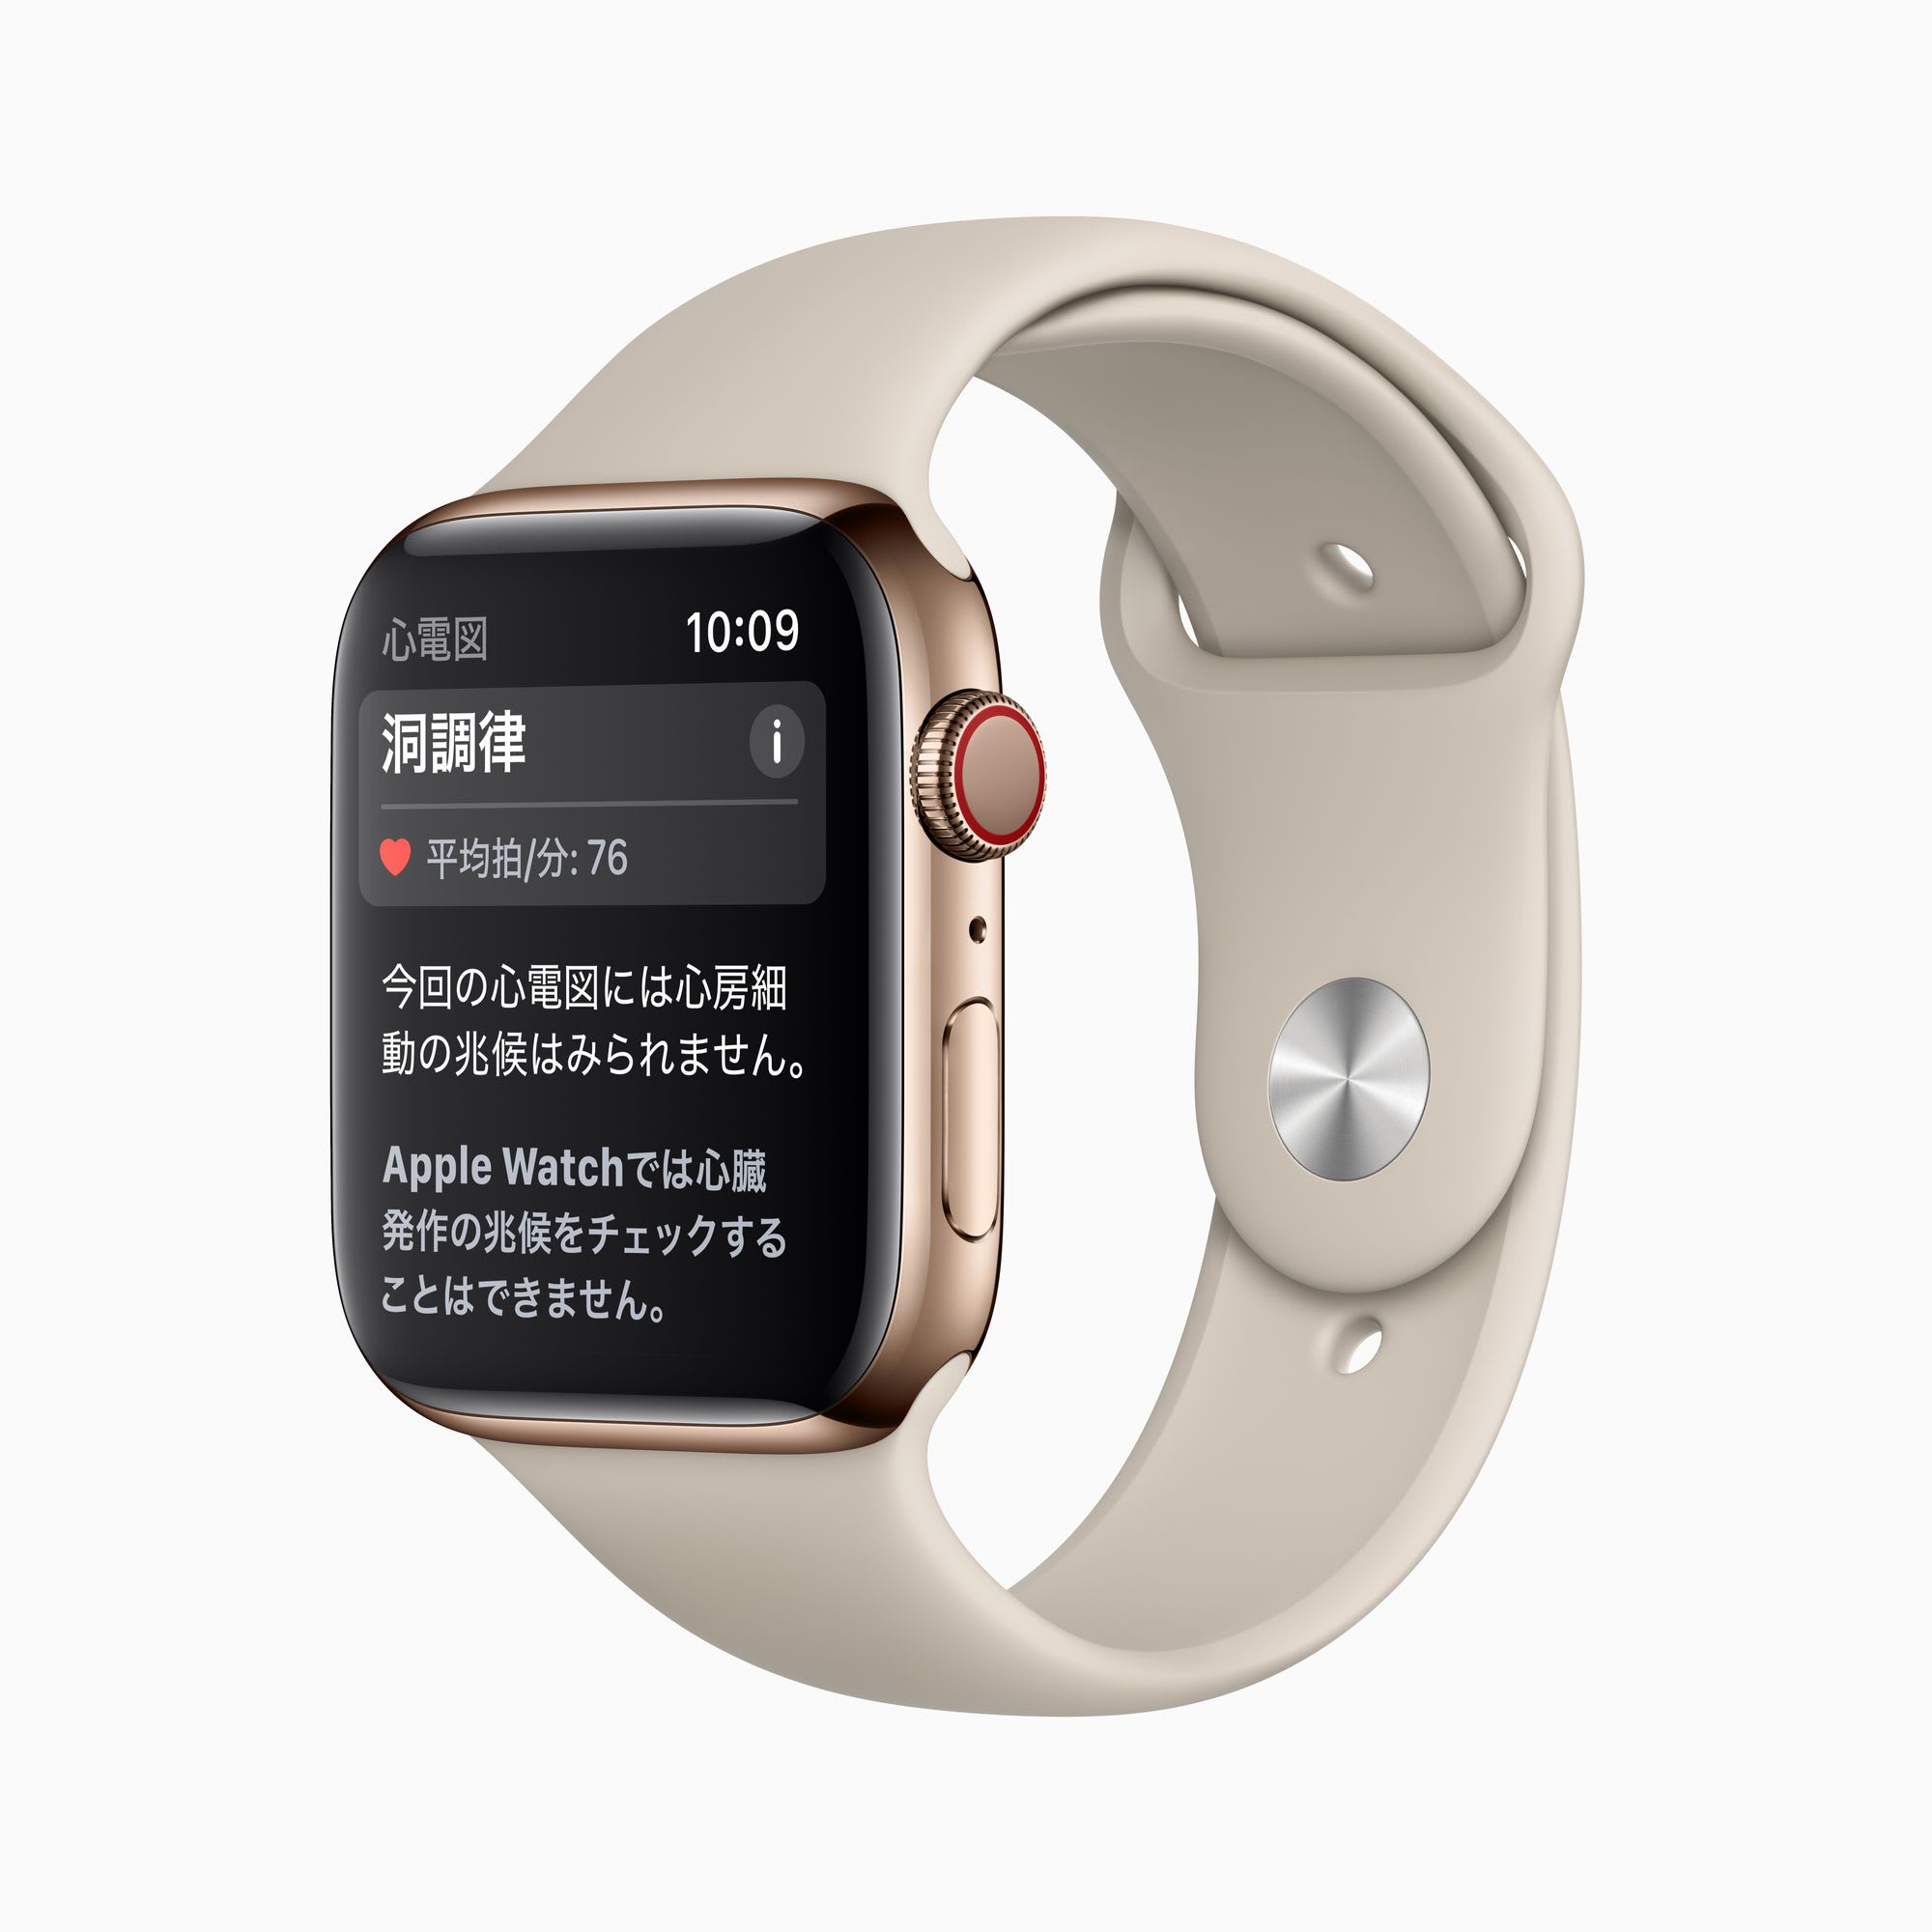 Apple Watch 日本での心電図(ECG)に対応